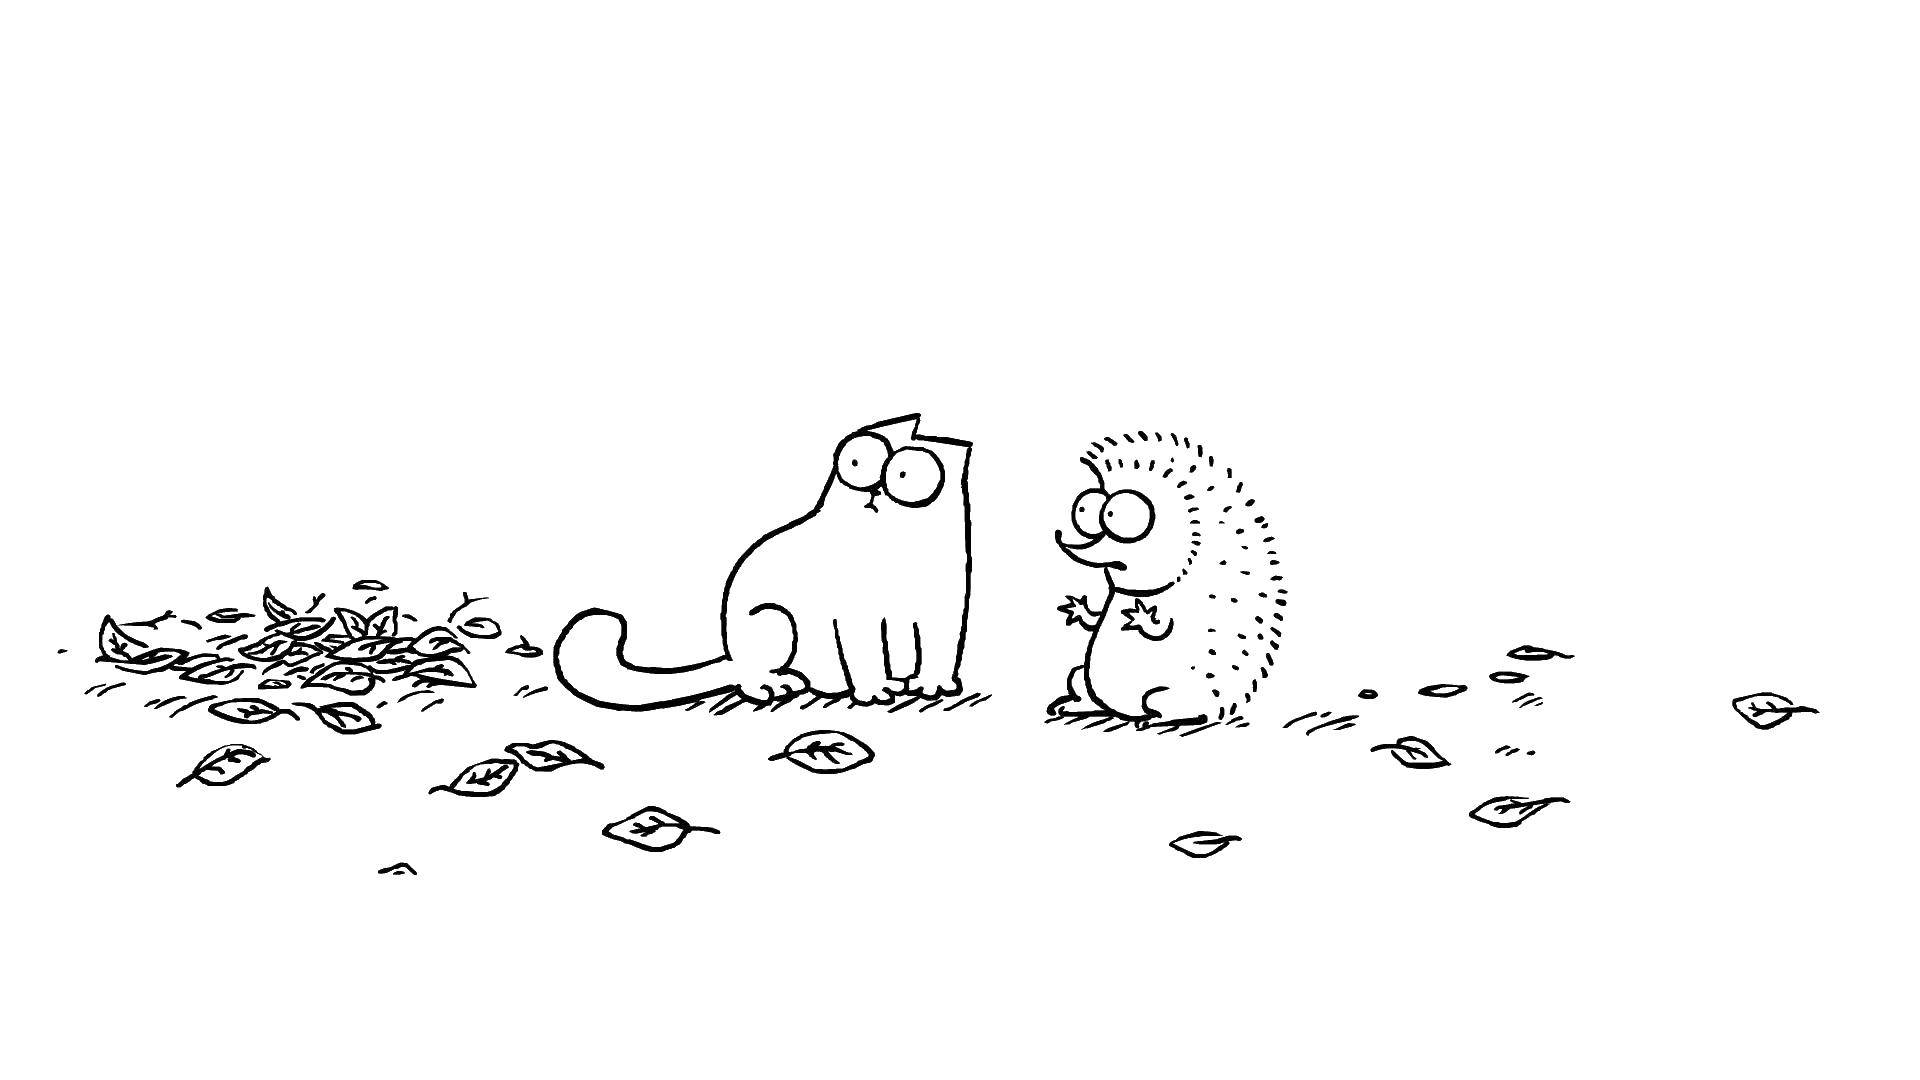 Coloring Кот саймона и ежик. Category кот саймона. Tags:  мультфильмы, кот Саймона.